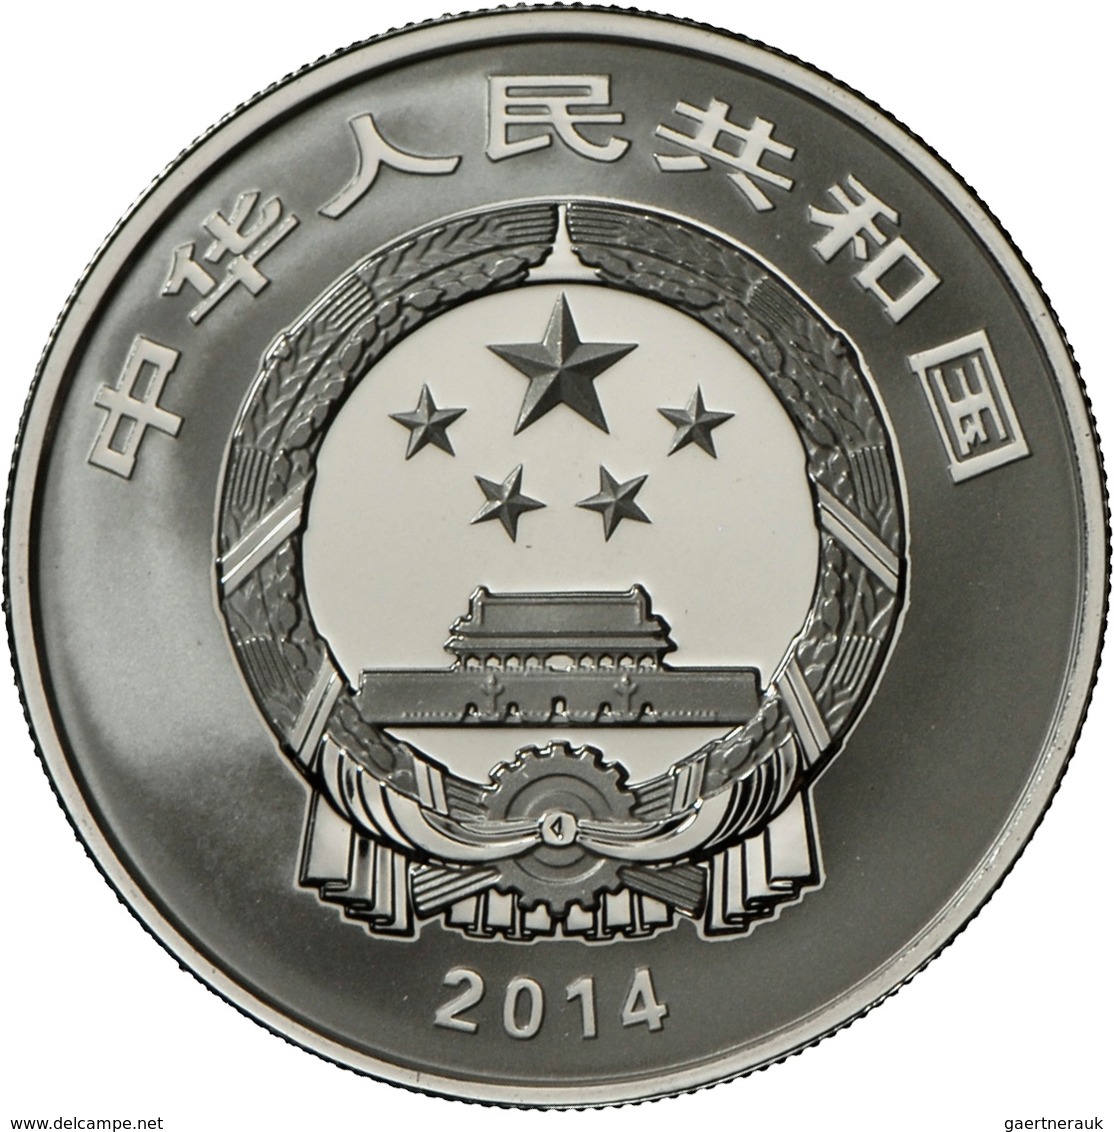 China - Volksrepublik: Set 5 Münzen 2014 Weltkulturerbe West Lake Landschaft in Hanghou: 4 x 5 Yuan